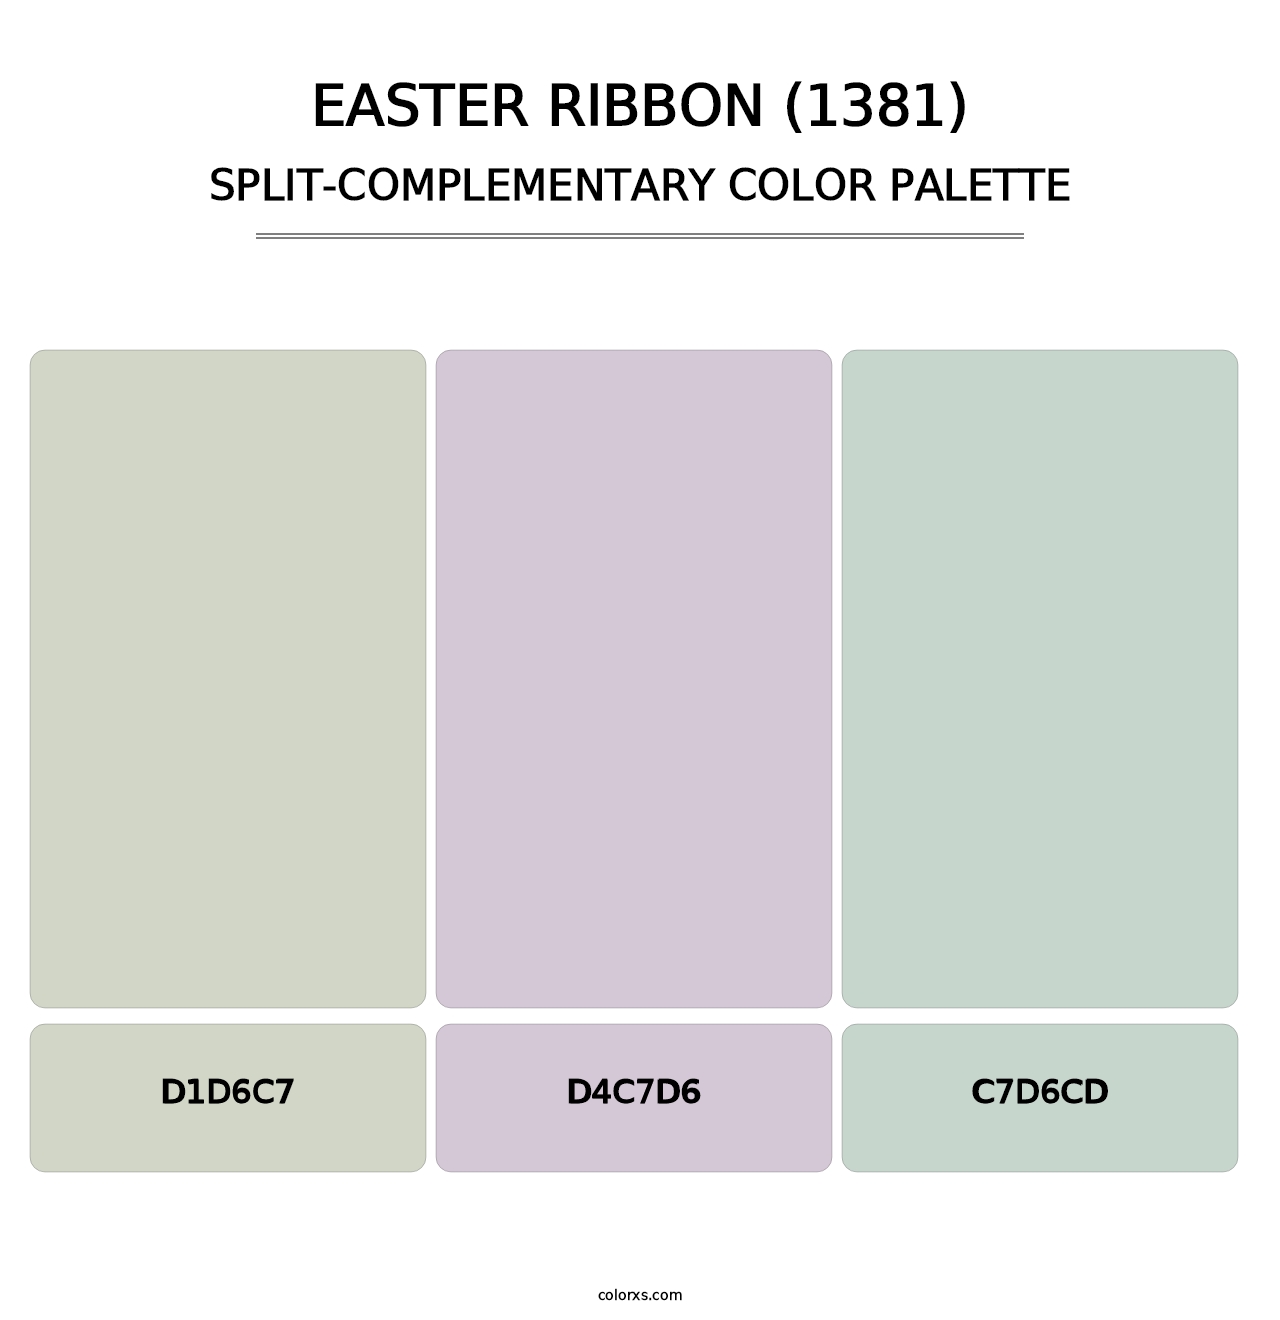 Easter Ribbon (1381) - Split-Complementary Color Palette